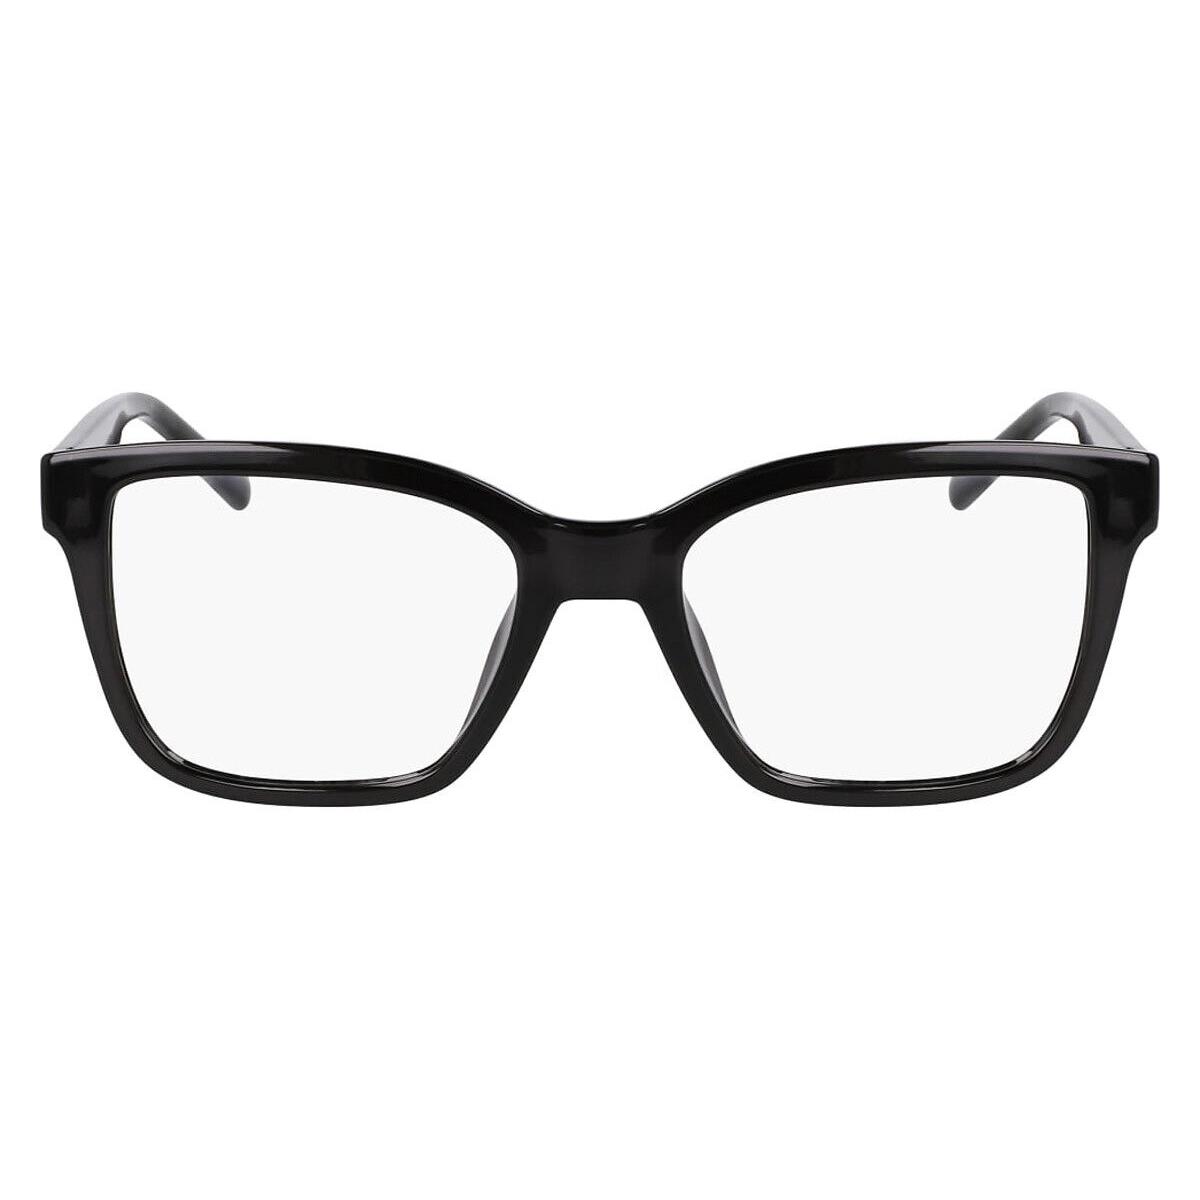 Dkny DK5069 Eyeglasses Women Black Crystal 53mm